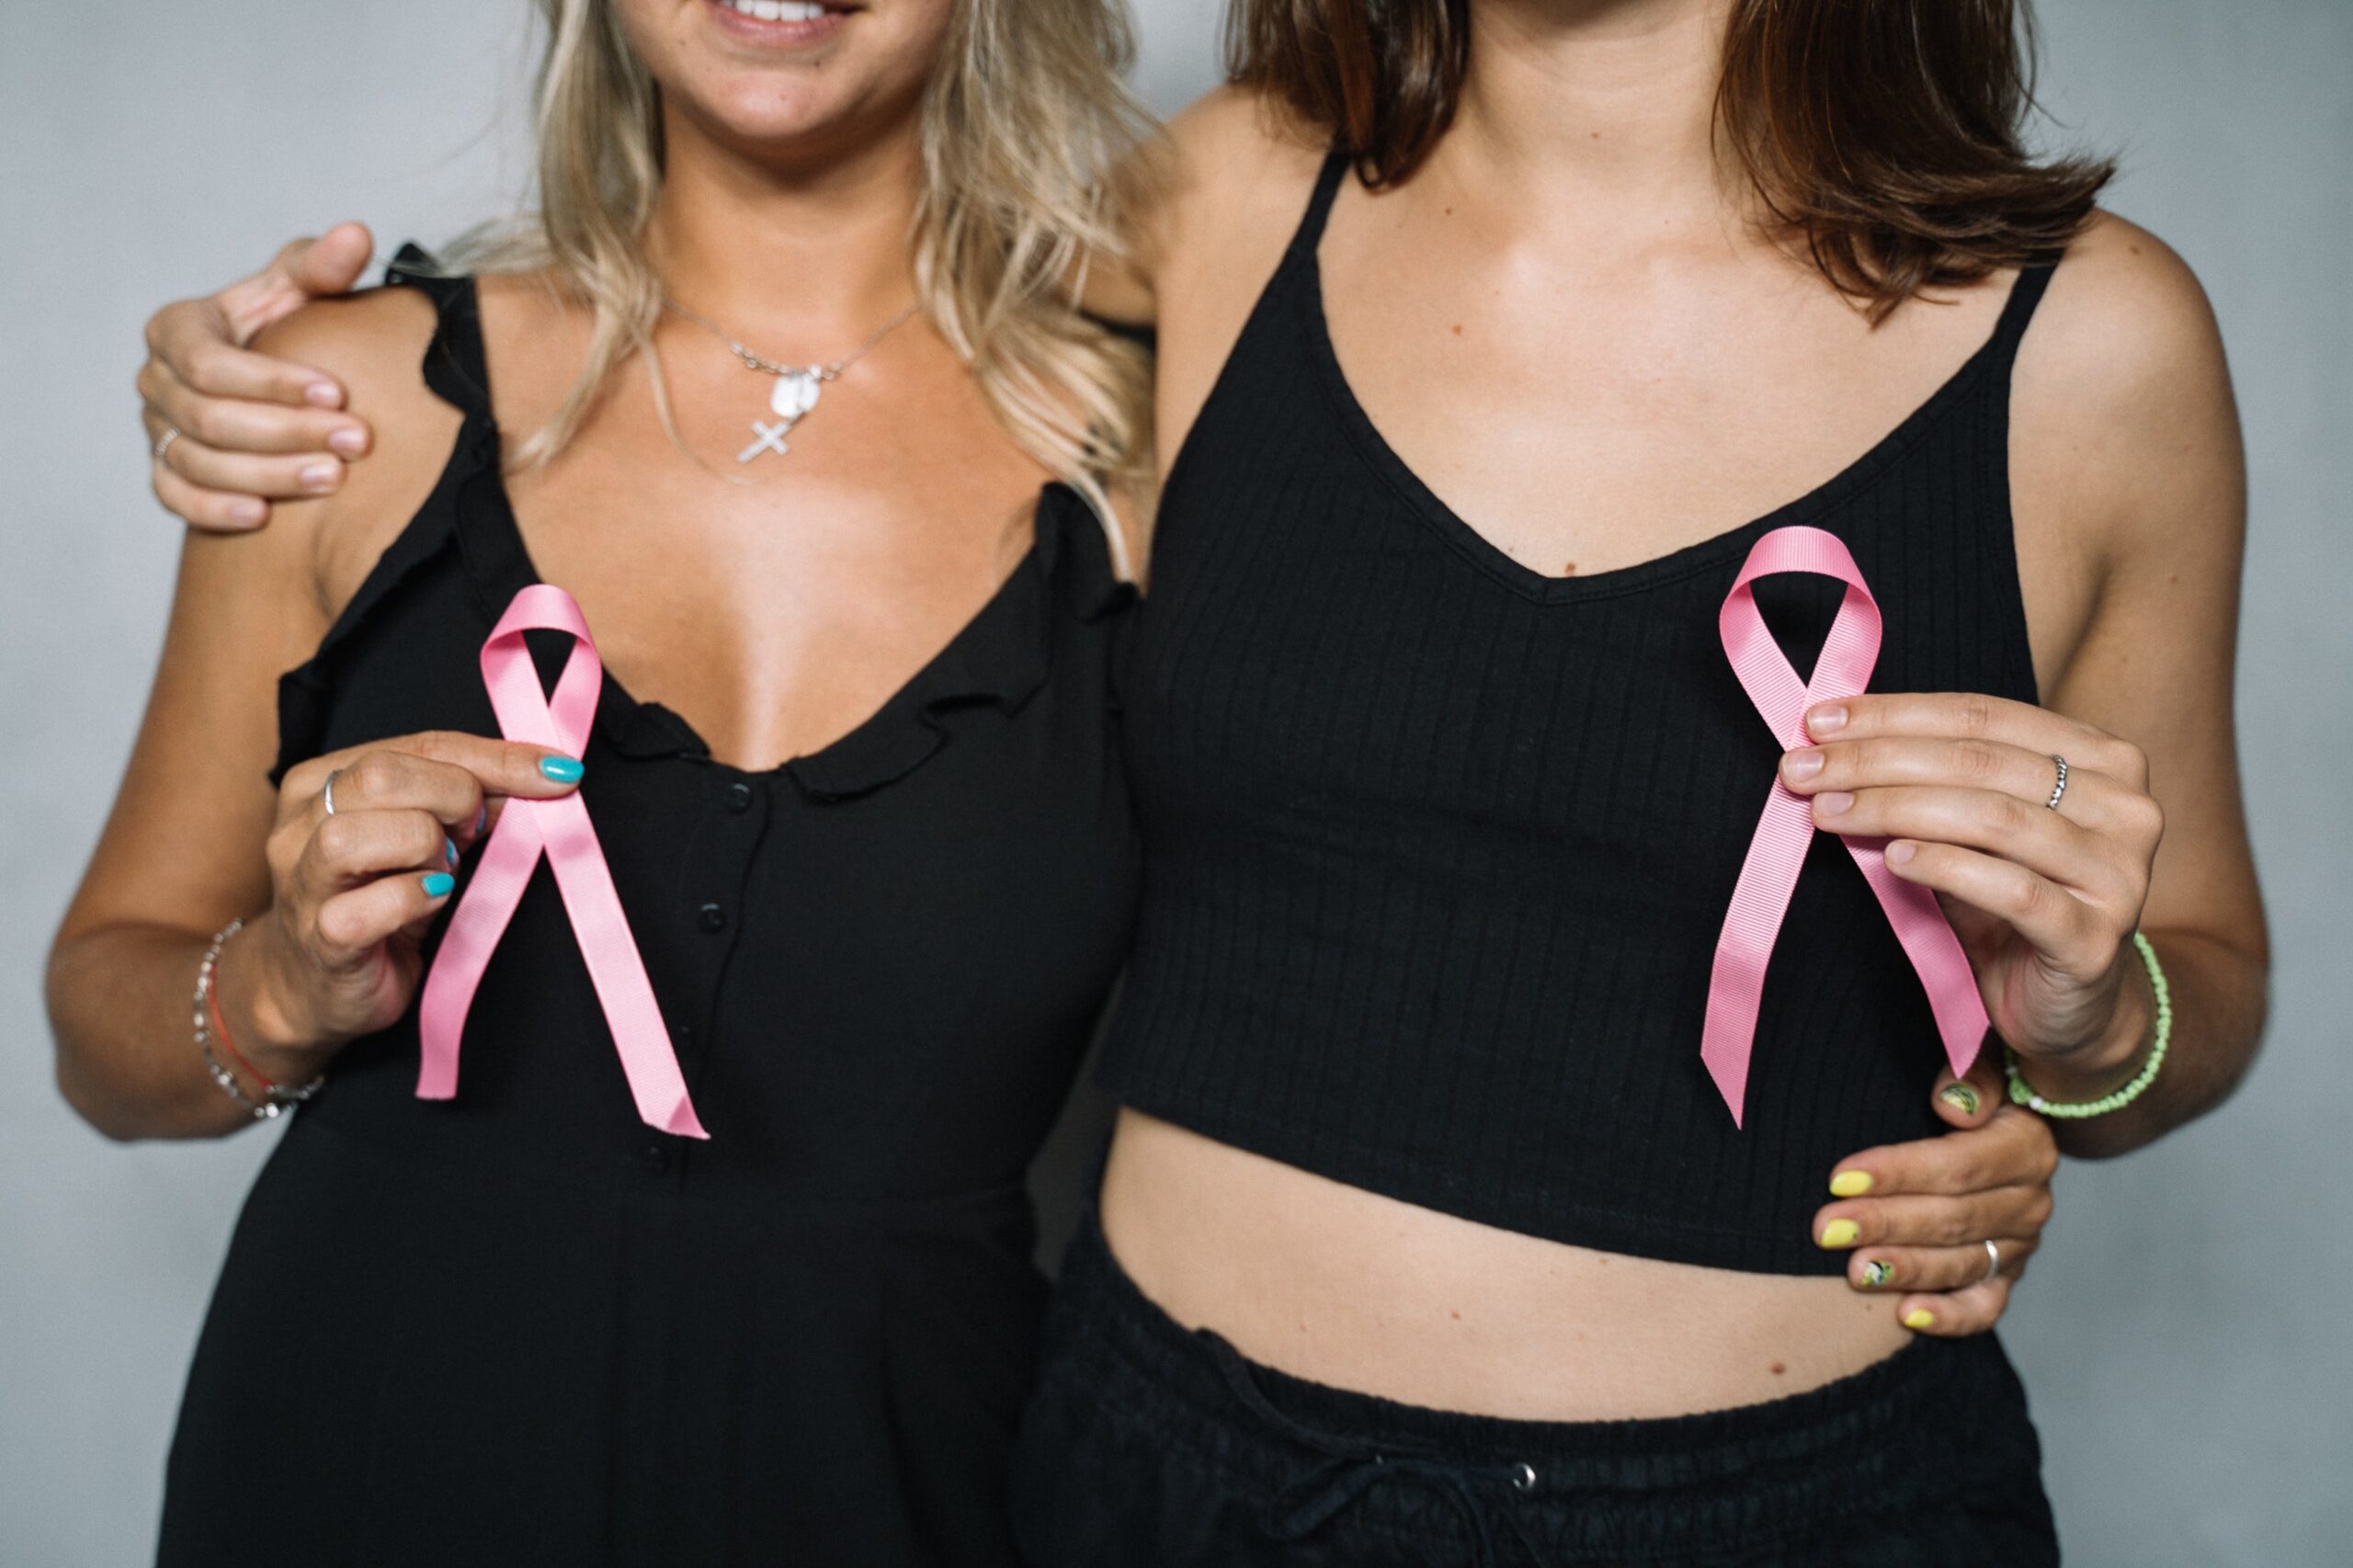 octobre rose prévention cancer du sein autopalpation sage-femme sophrologie beignon morbihan